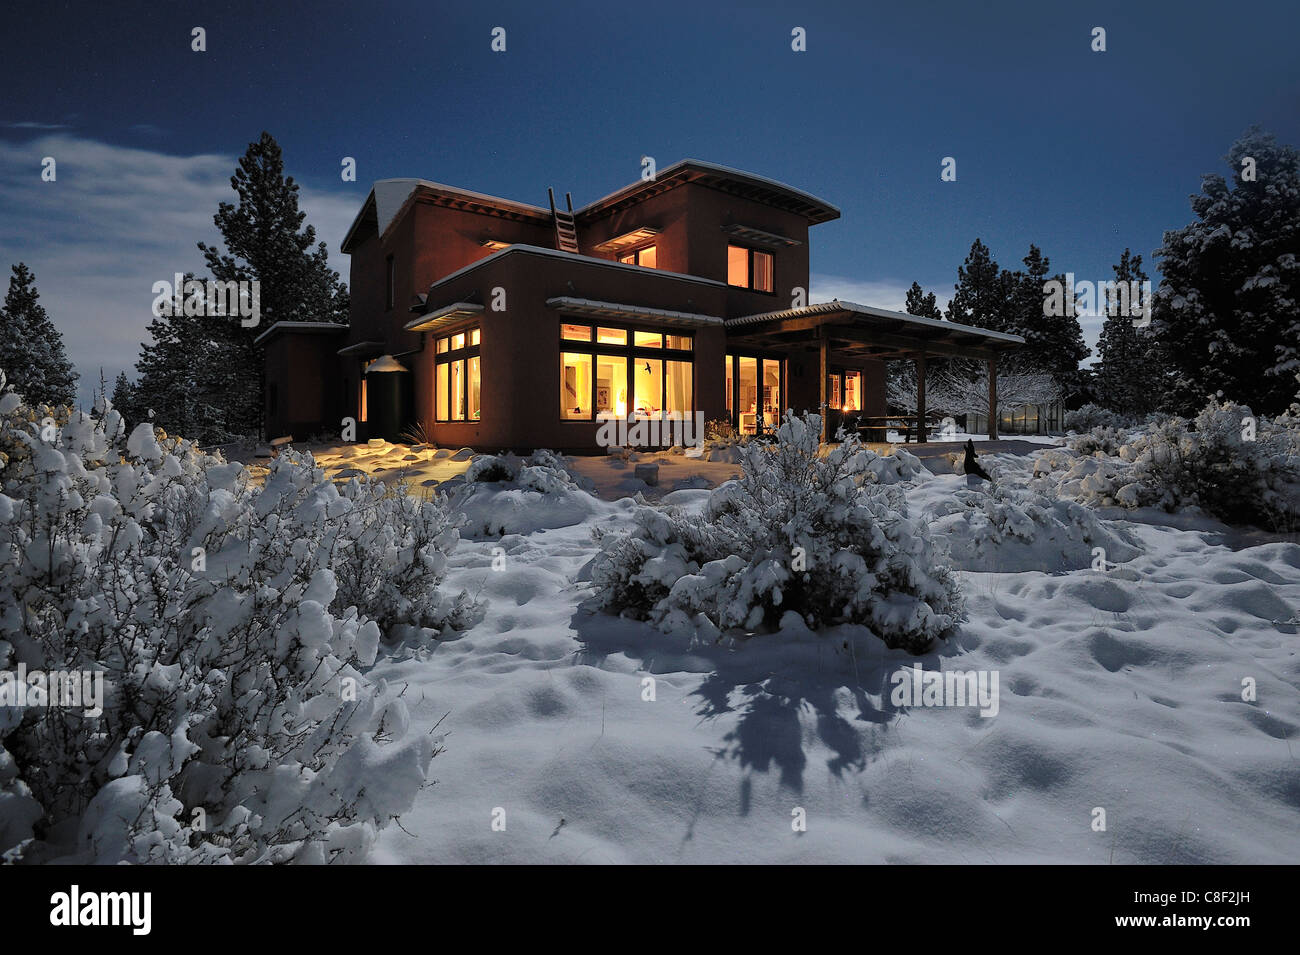 Adobe-Stil, Strohballen, Haus, Schnee, High Desert, Oregon, USA, USA, Amerika, Stockfoto